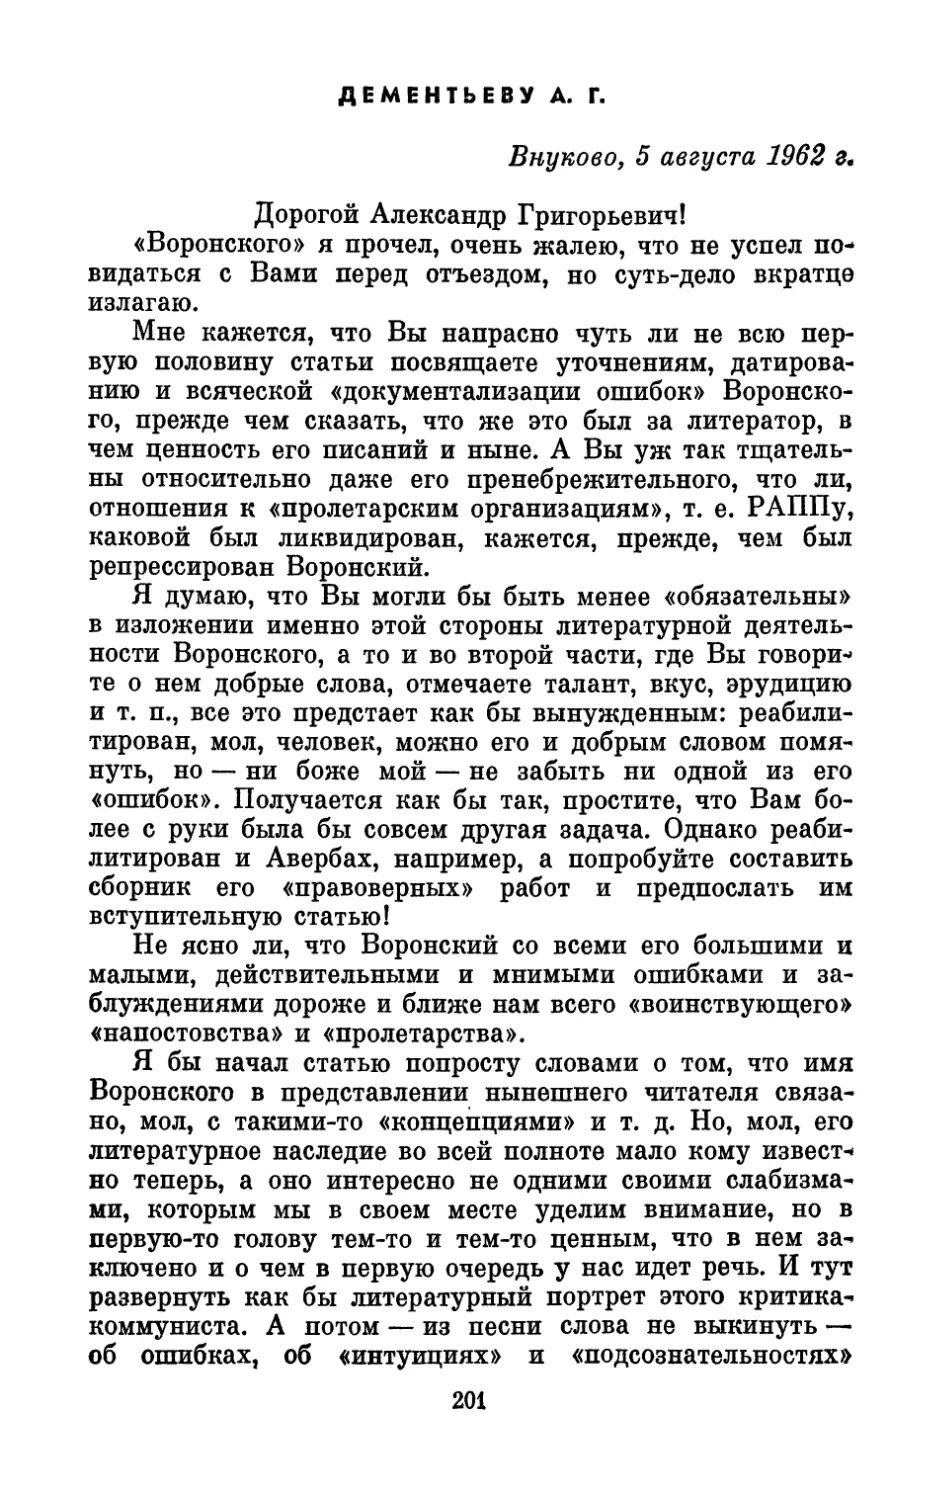 Дементьеву А. Г., 5 августа 1962 г.